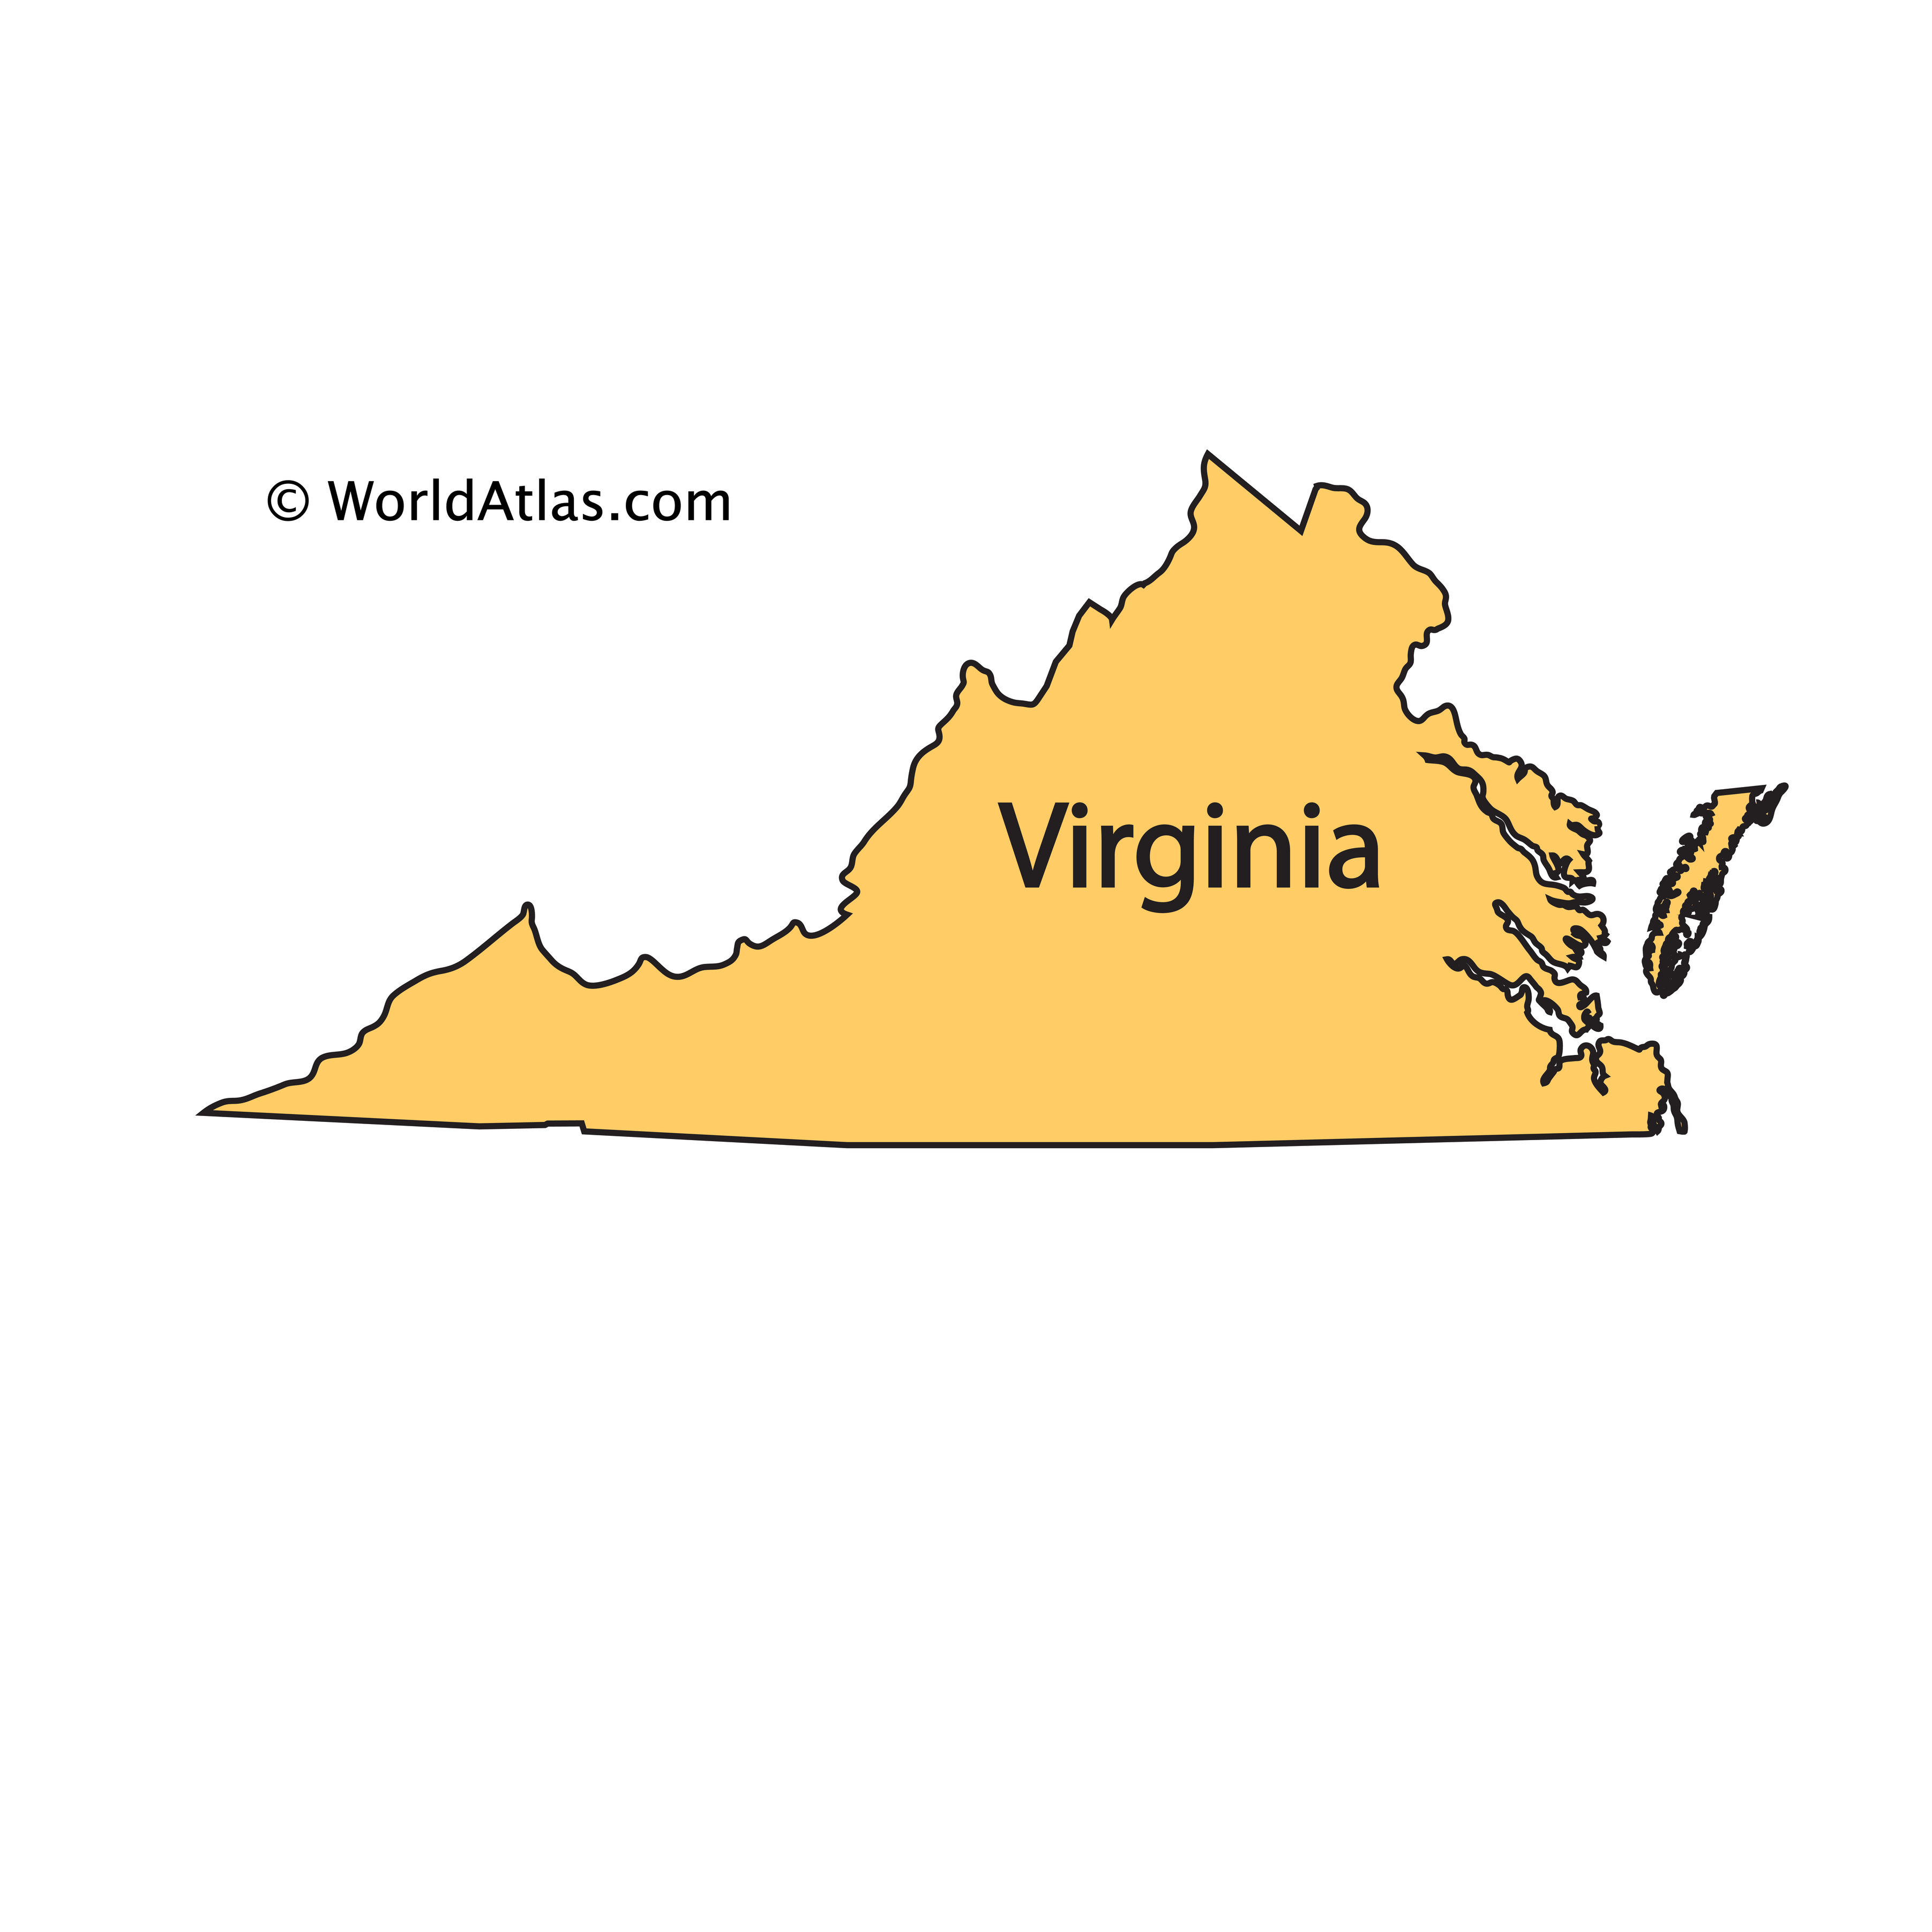 Virginia Maps & Facts - World Atlas